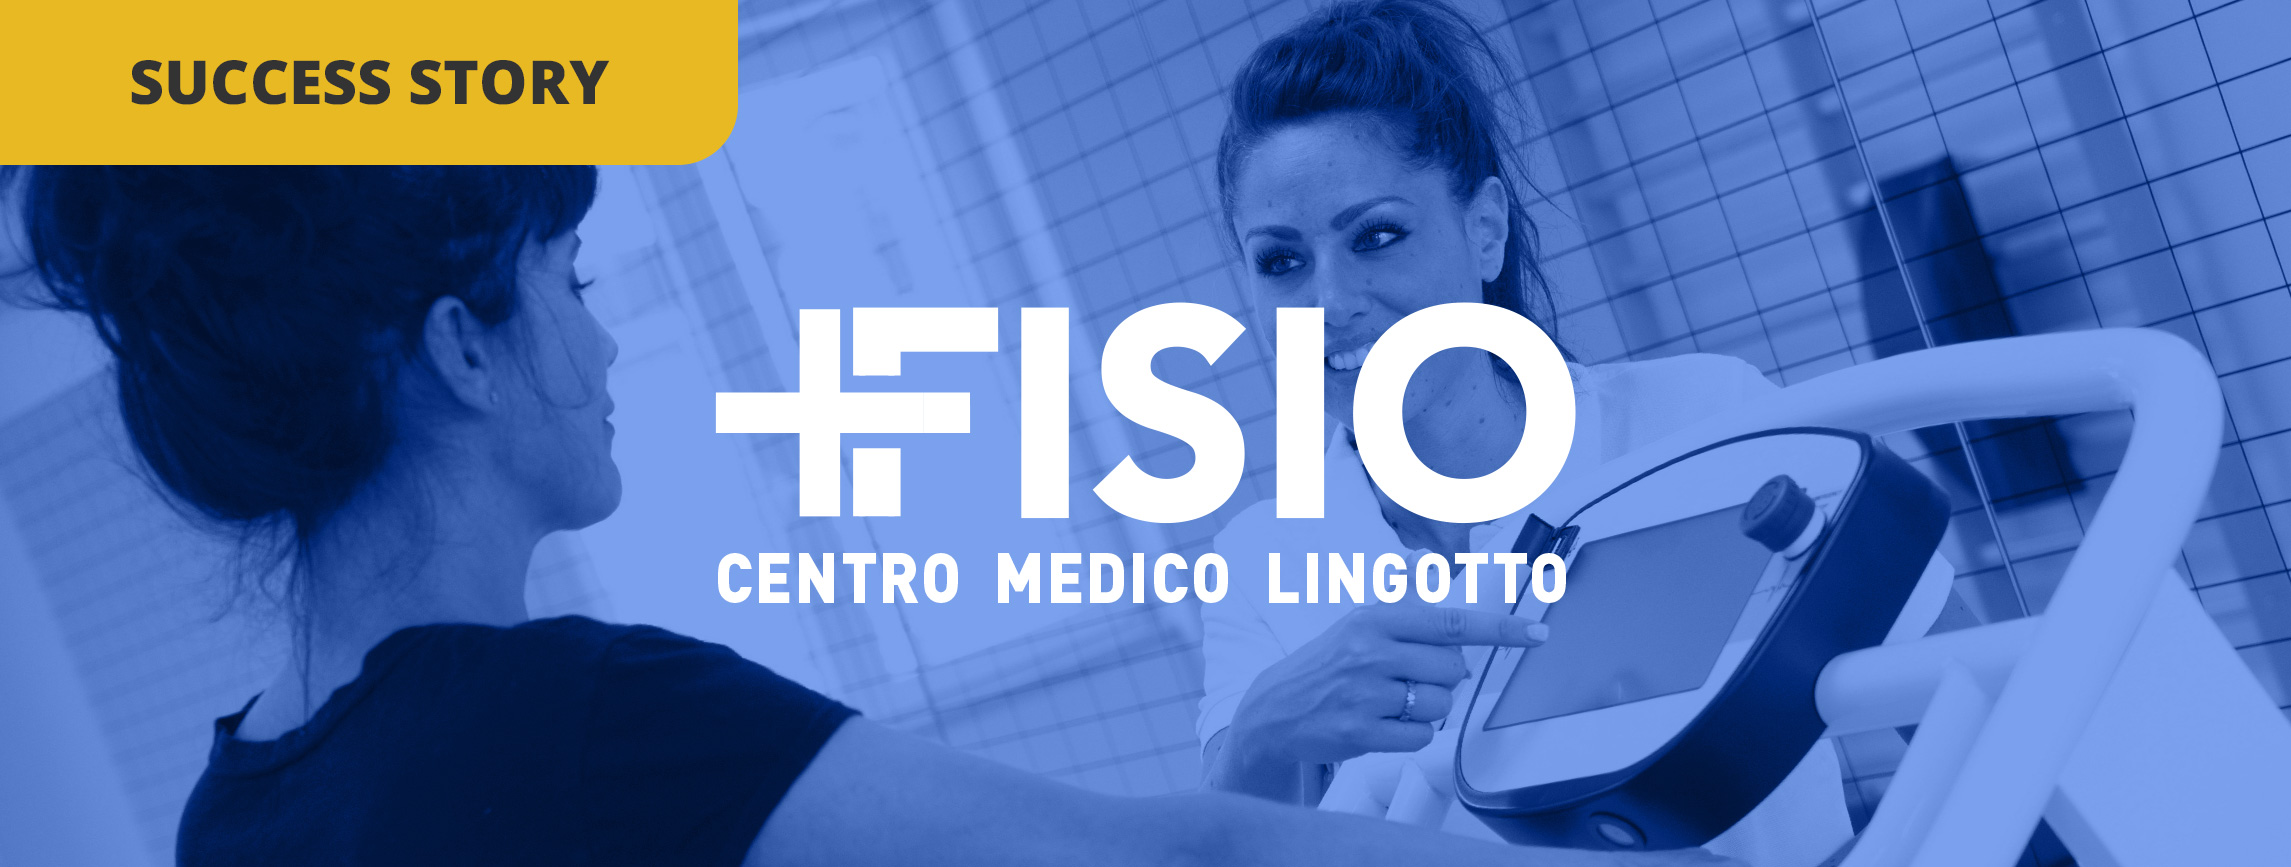 La succès story du Centro Medico Fisio Lingotto